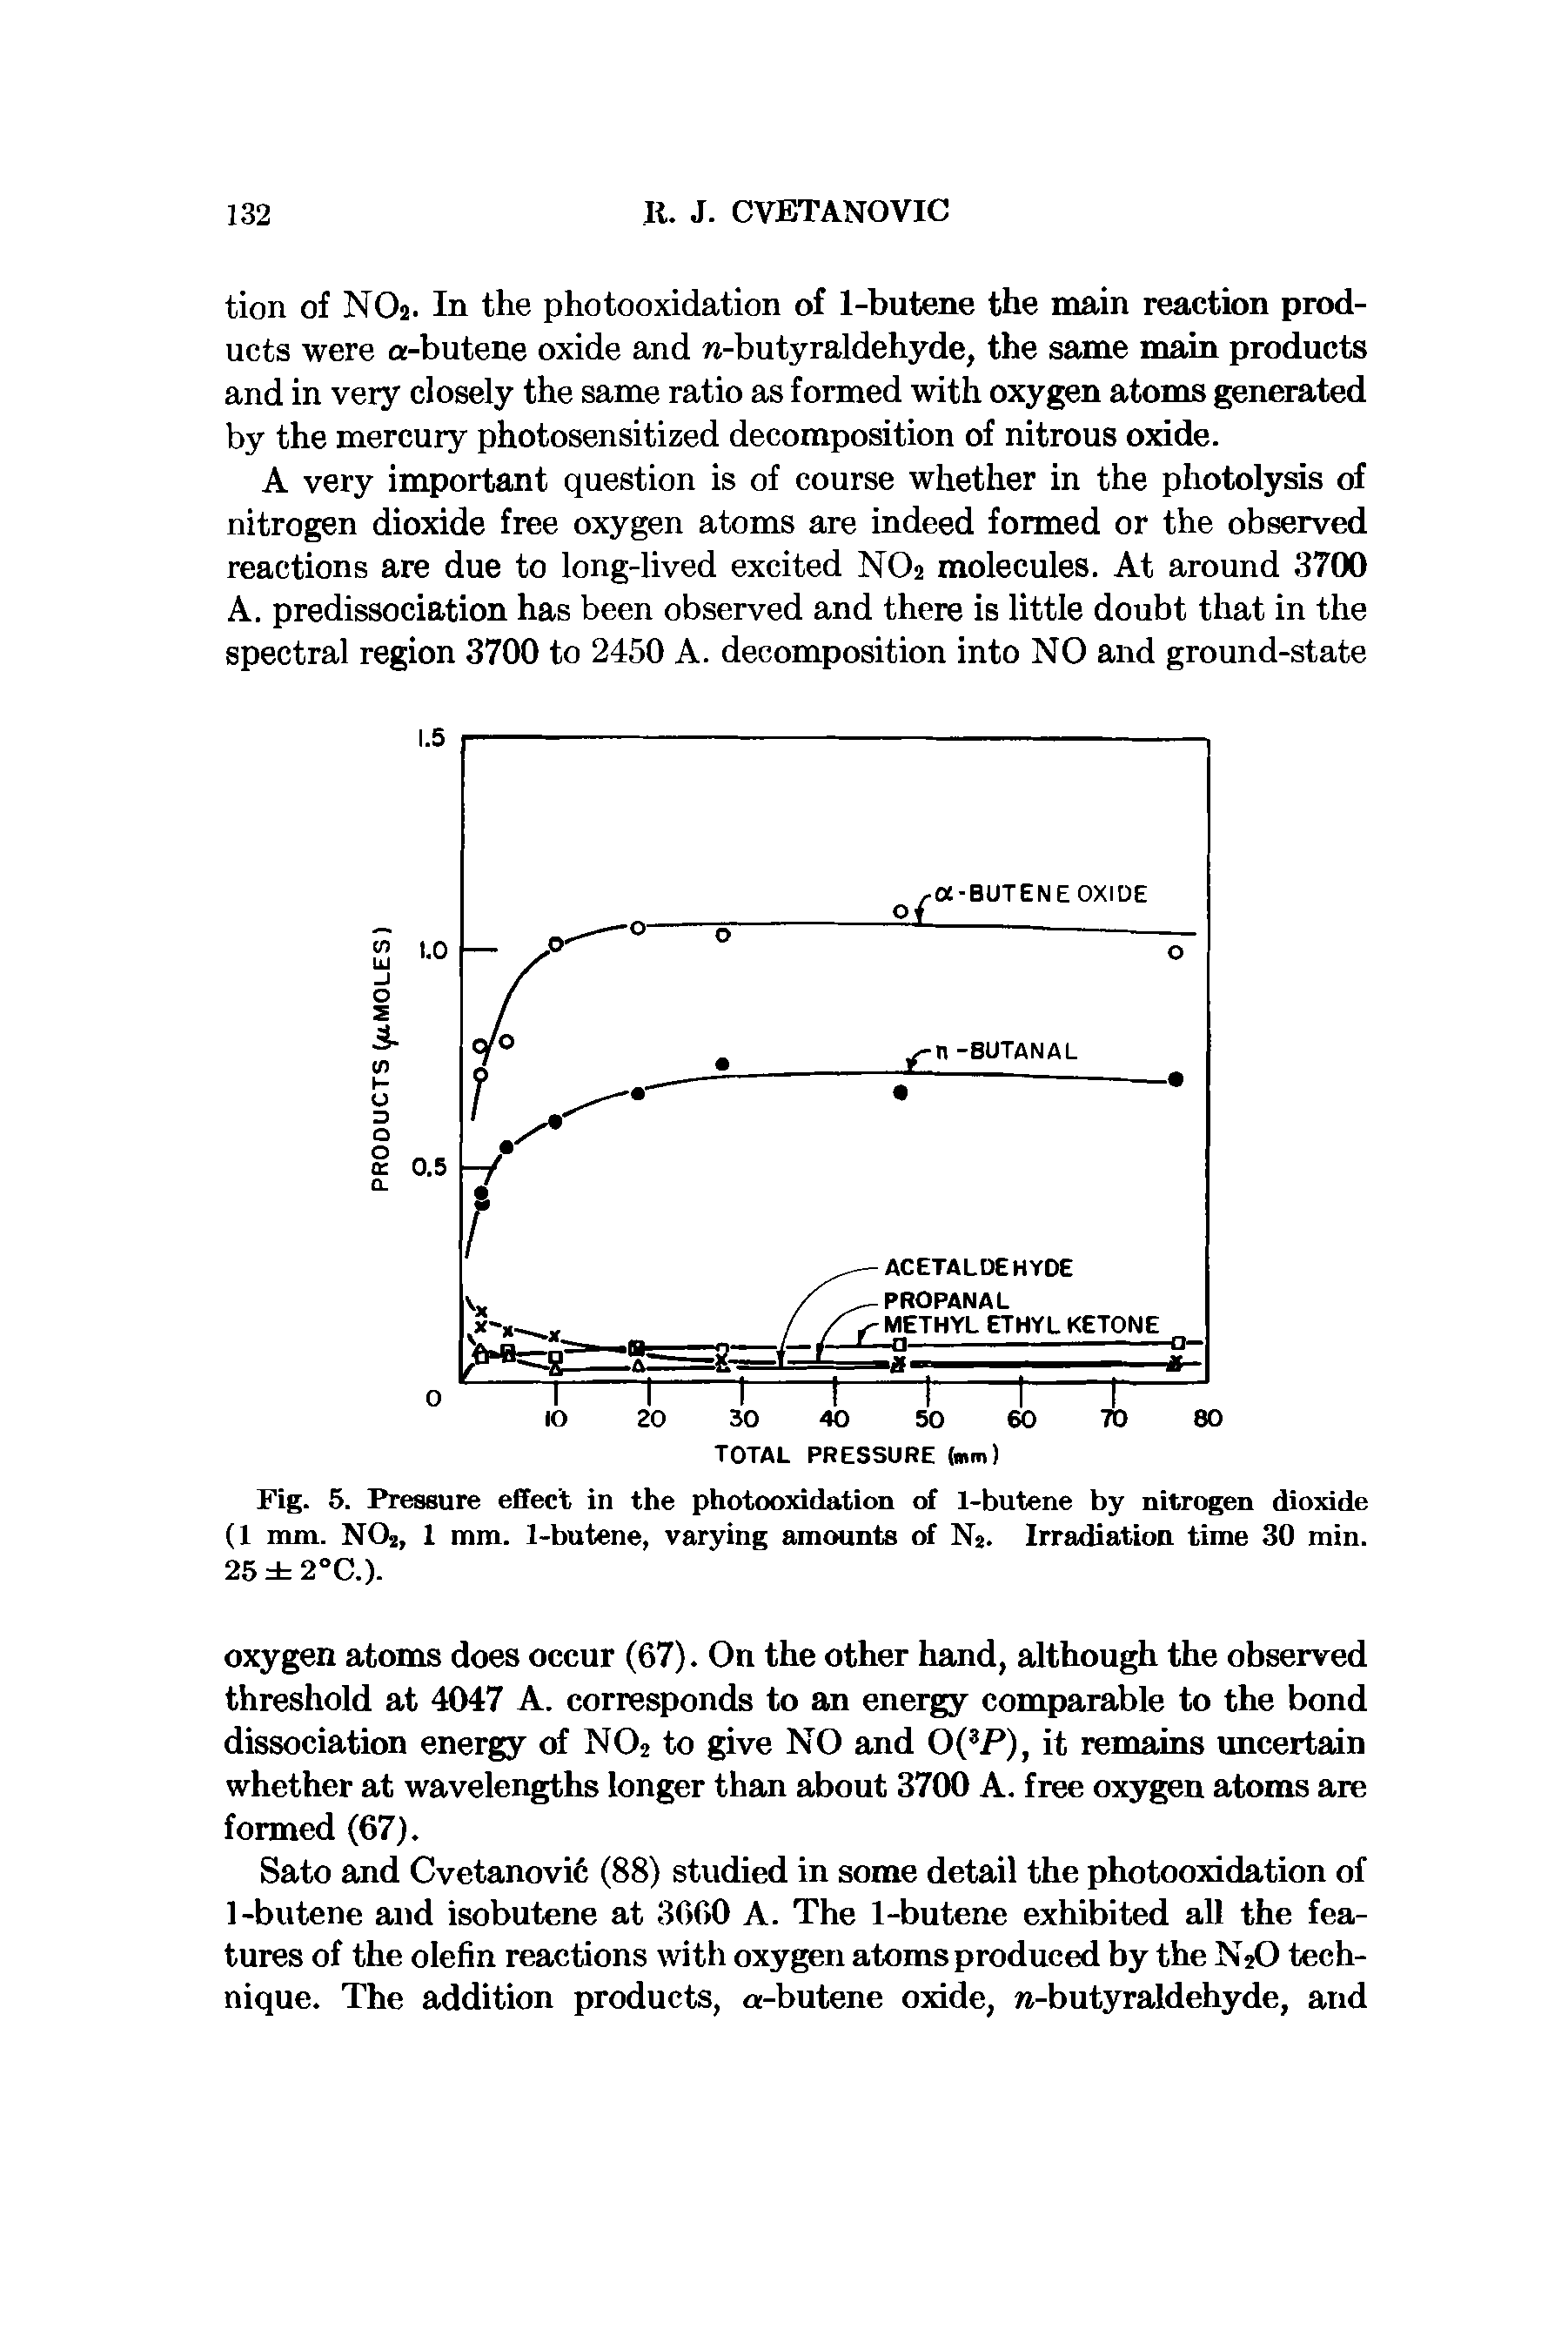 Fig. 5. Pressure effect in the photooxidation of 1-butene by nitrogen dioxide (1 mm. NOj, 1 mm. 1-butene, varying amounts of N. Irradiation time 30 min. 25 2°C.).